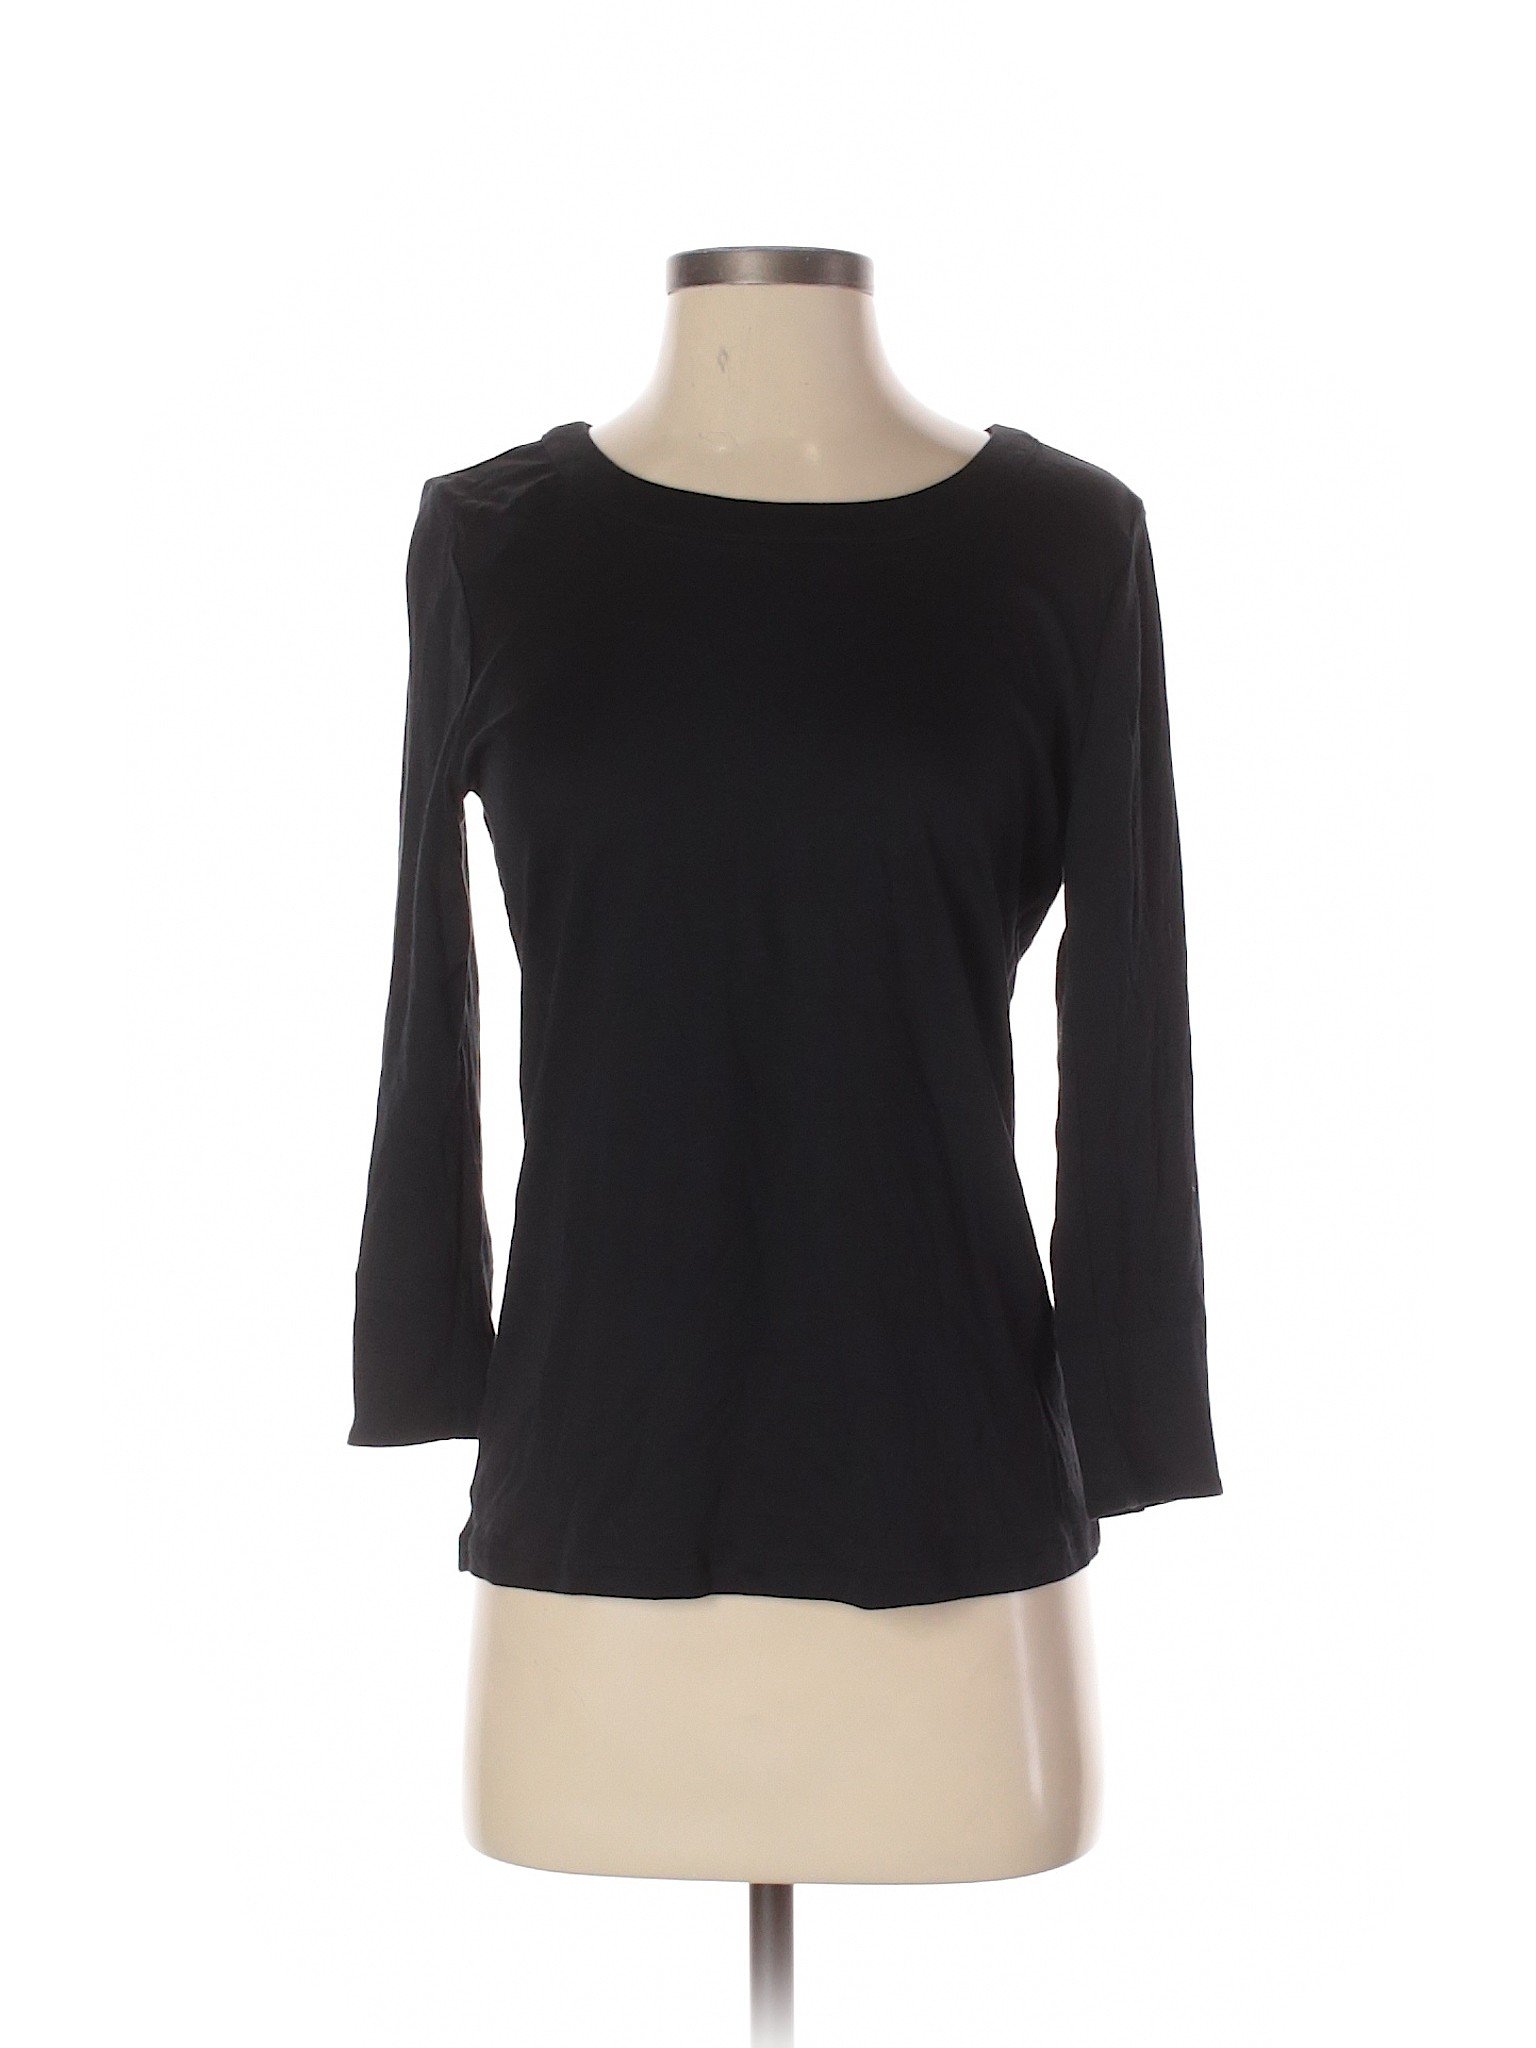 Talbots Women Black 3/4 Sleeve T-Shirt S | eBay